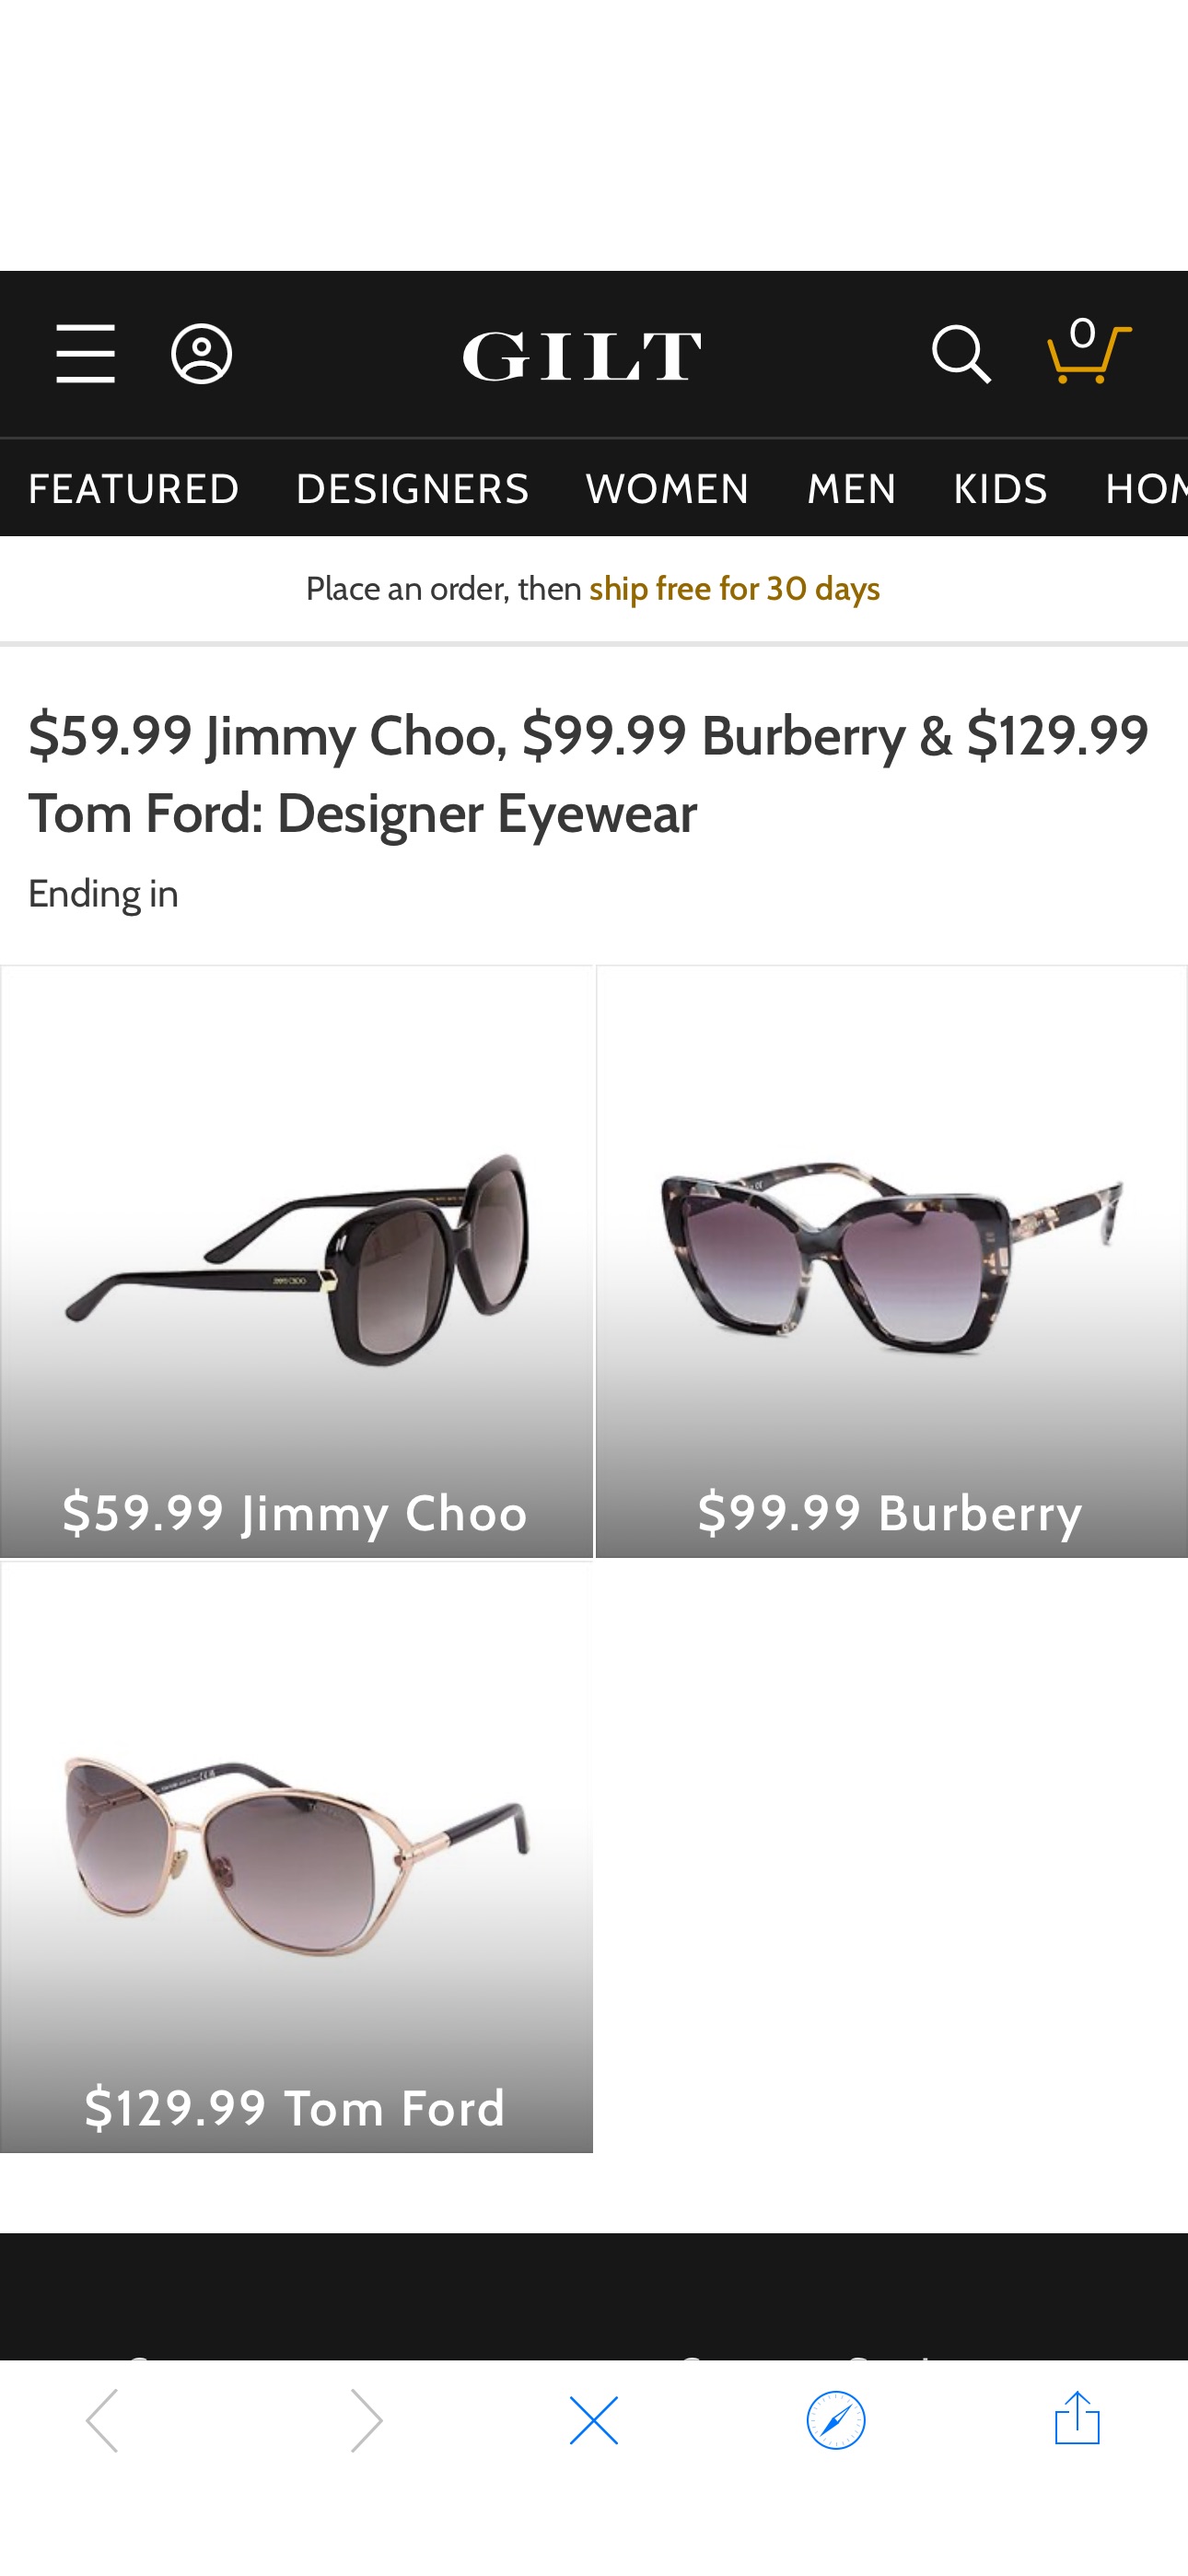 $59.99 Jimmy Choo, $99.99 Burberry & $129.99 Tom Ford: Designer Eyewear / Gilt